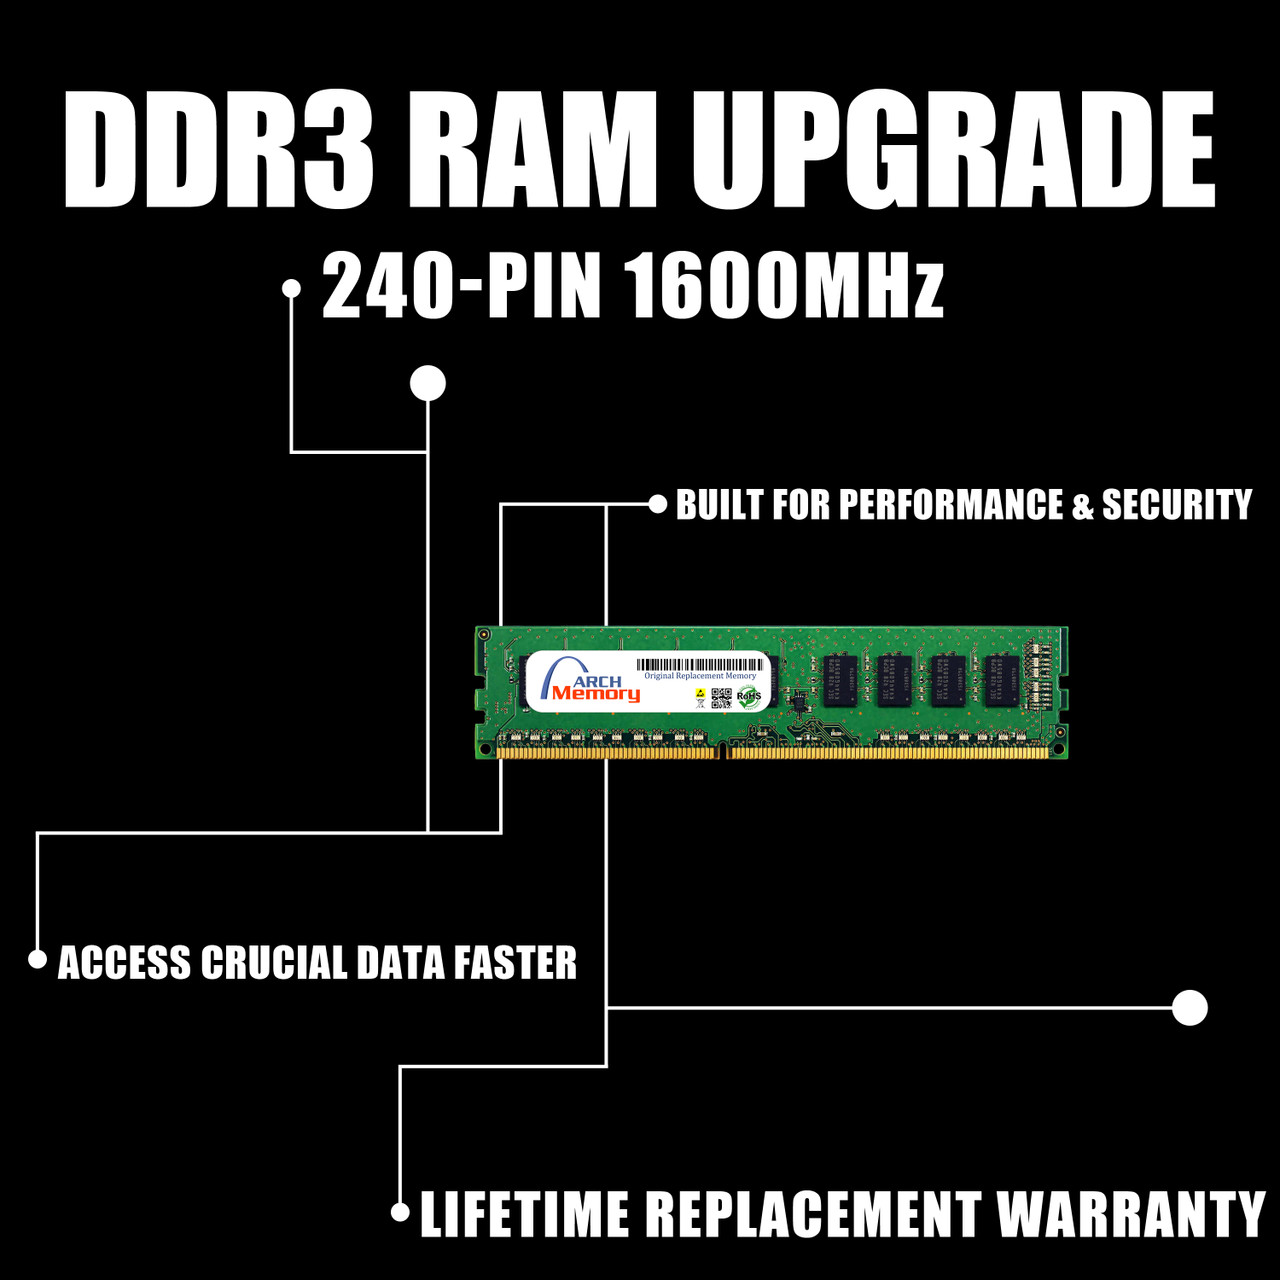 8GB D1G72K110K4 kit (4 x 8 GB) DDR3 1600MHz 240-Pin ECC UDIMM RAM | Kingston Replacement Memory